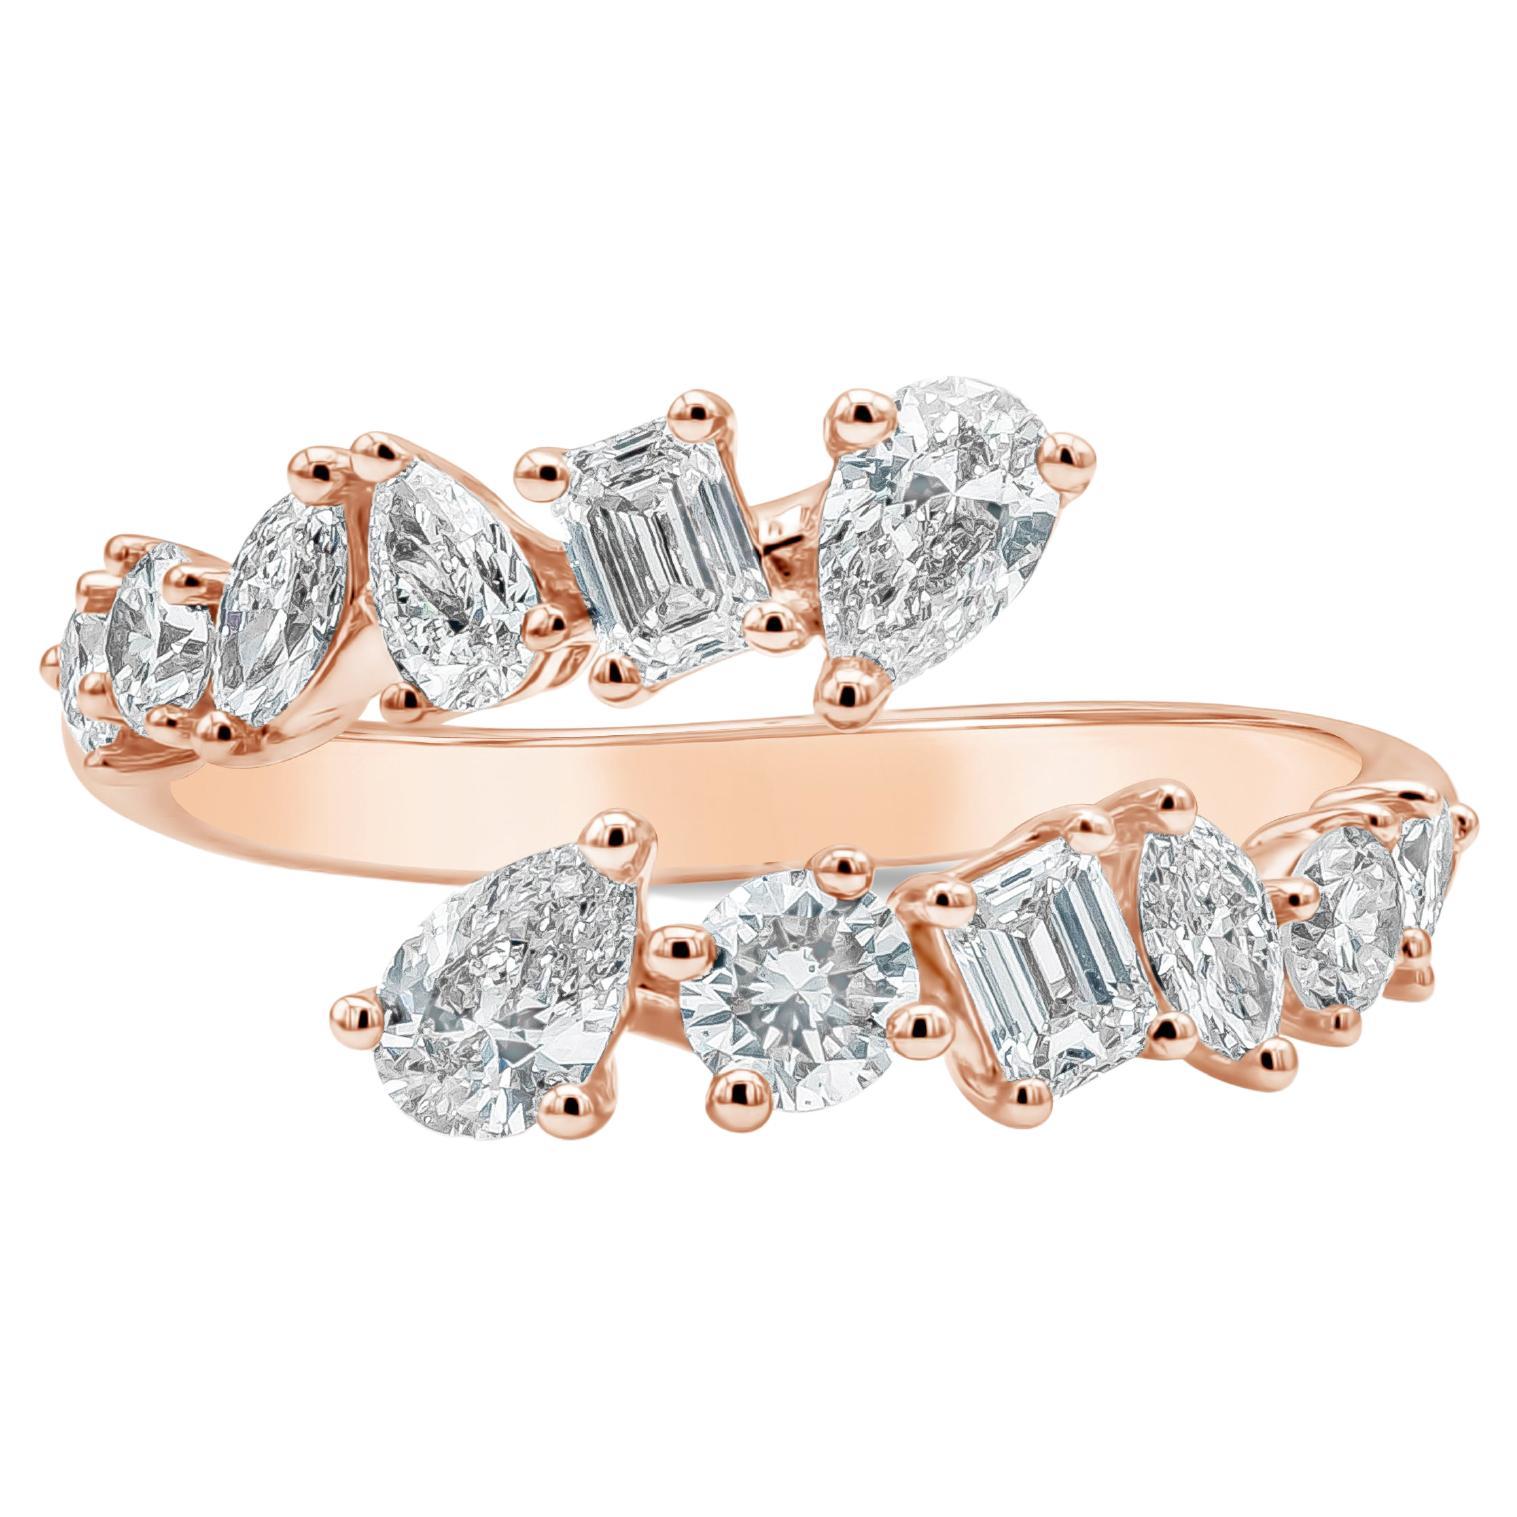 Roman Malakov 1.33 Carats Total Mixed Shape Diamonds Fashion Ring